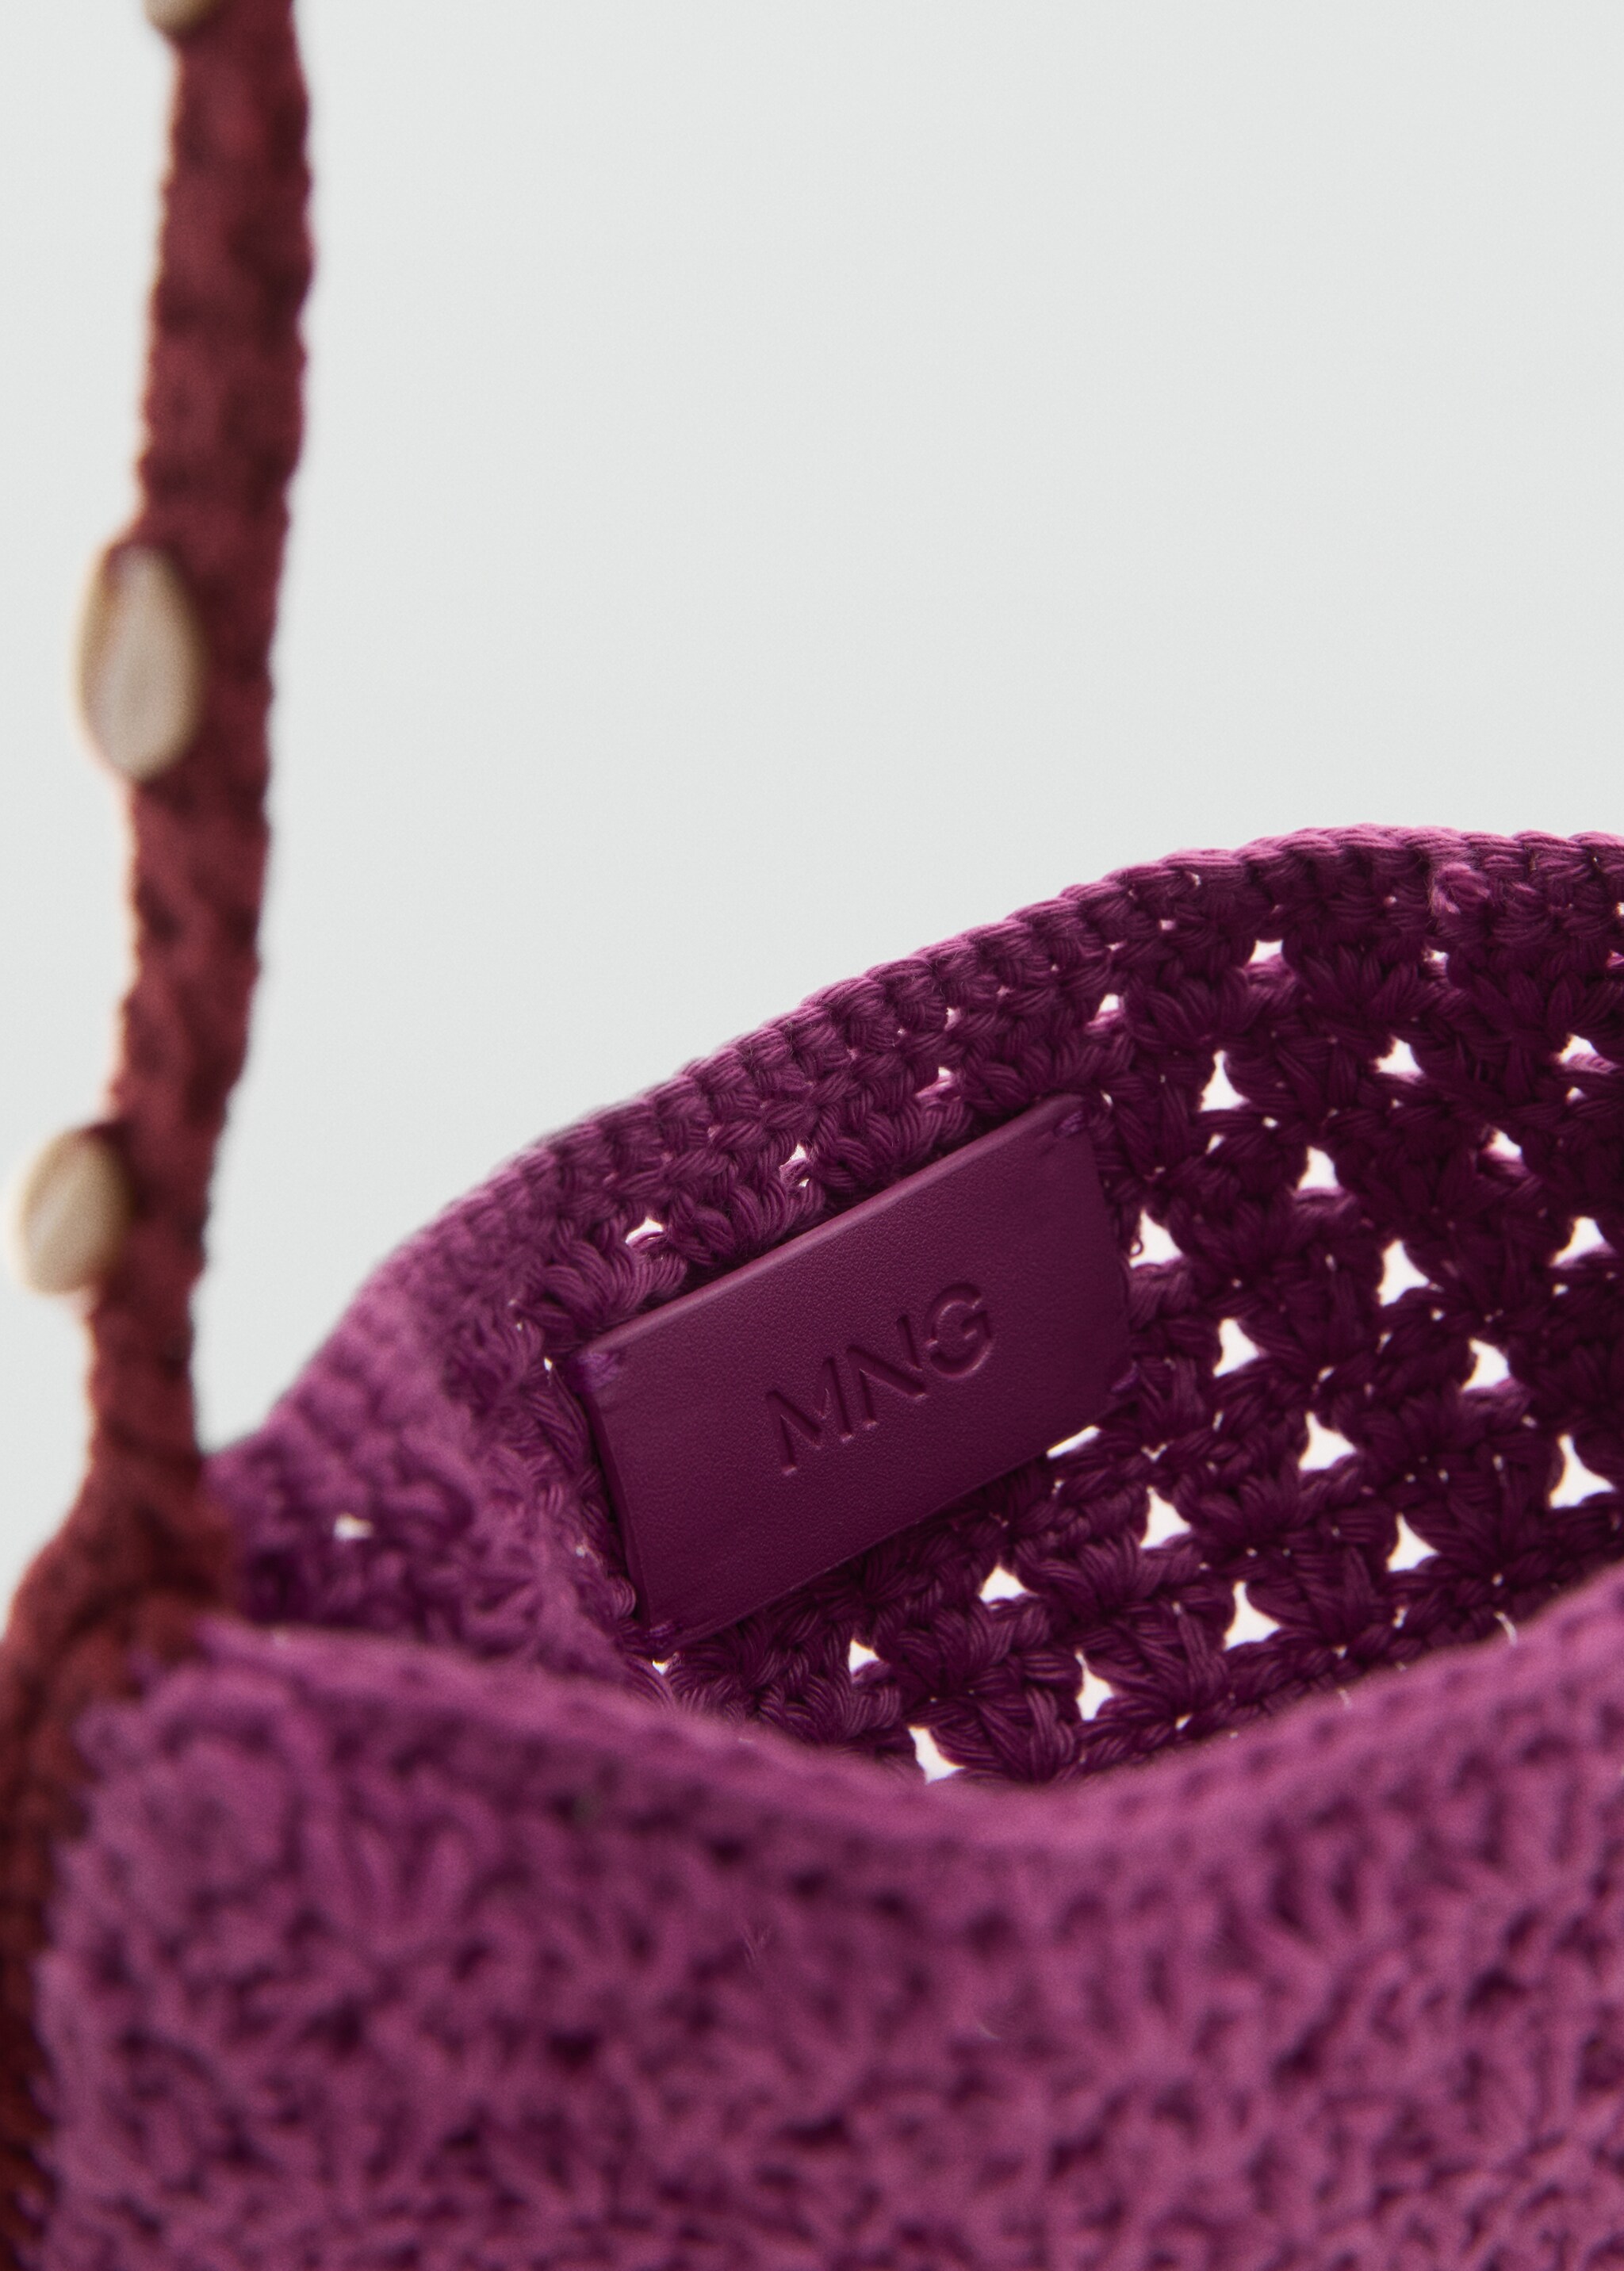 Crochet handbag - Details of the article 2